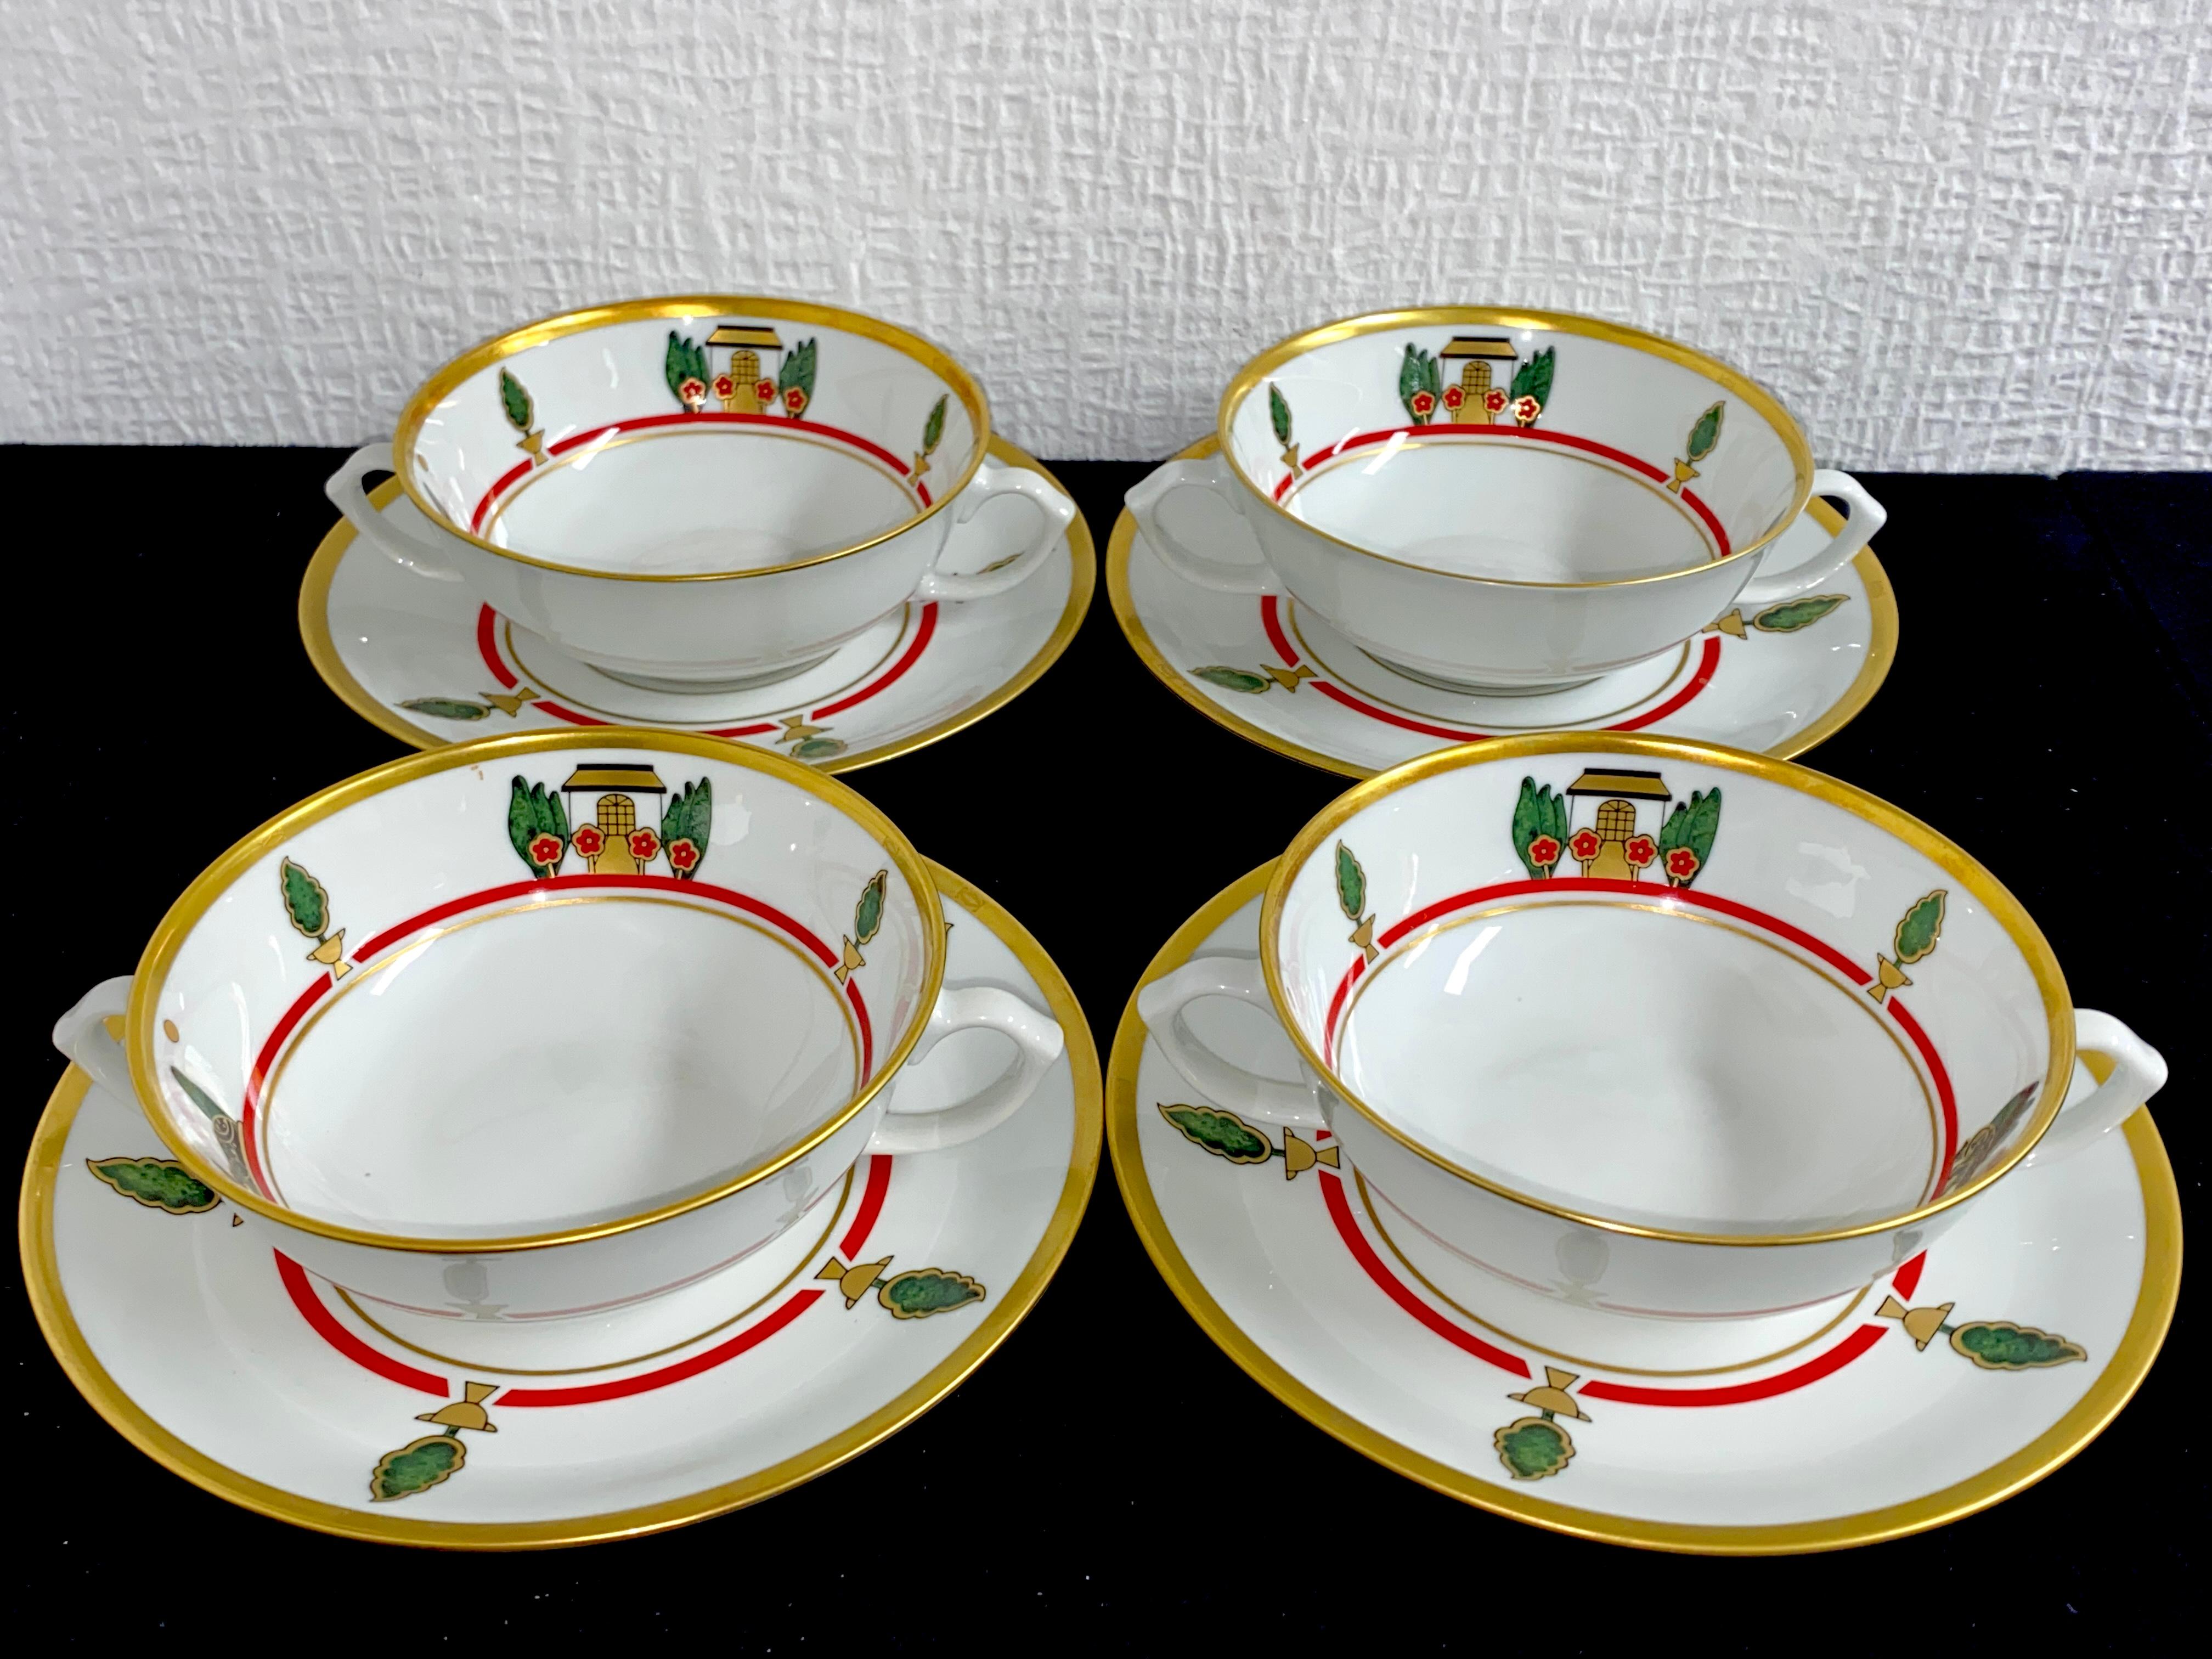 French Porcelain Dinnerware, Tableware by Limoges and La Maison de Louis Cartier